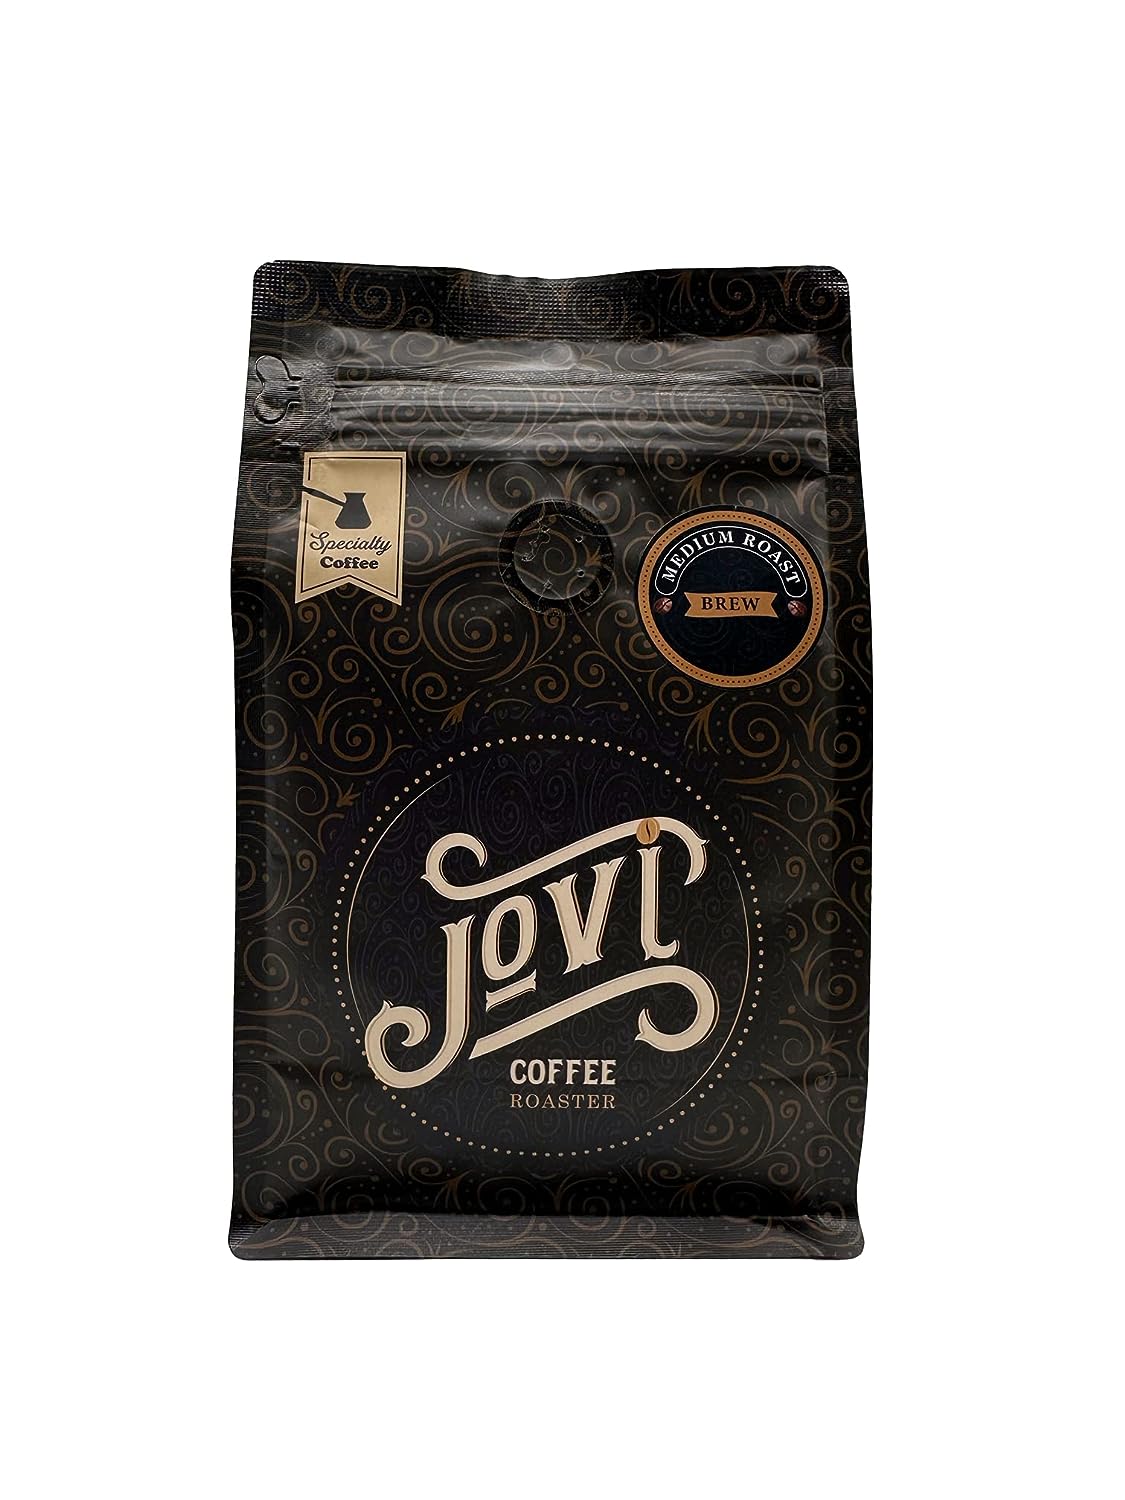 JoVi Coffee Roasters, Best Whole Bean Coffee  - Premium Marcala Honduras -100% Arabica 85 Score Specialty Grade, Rich, Full-Bodied